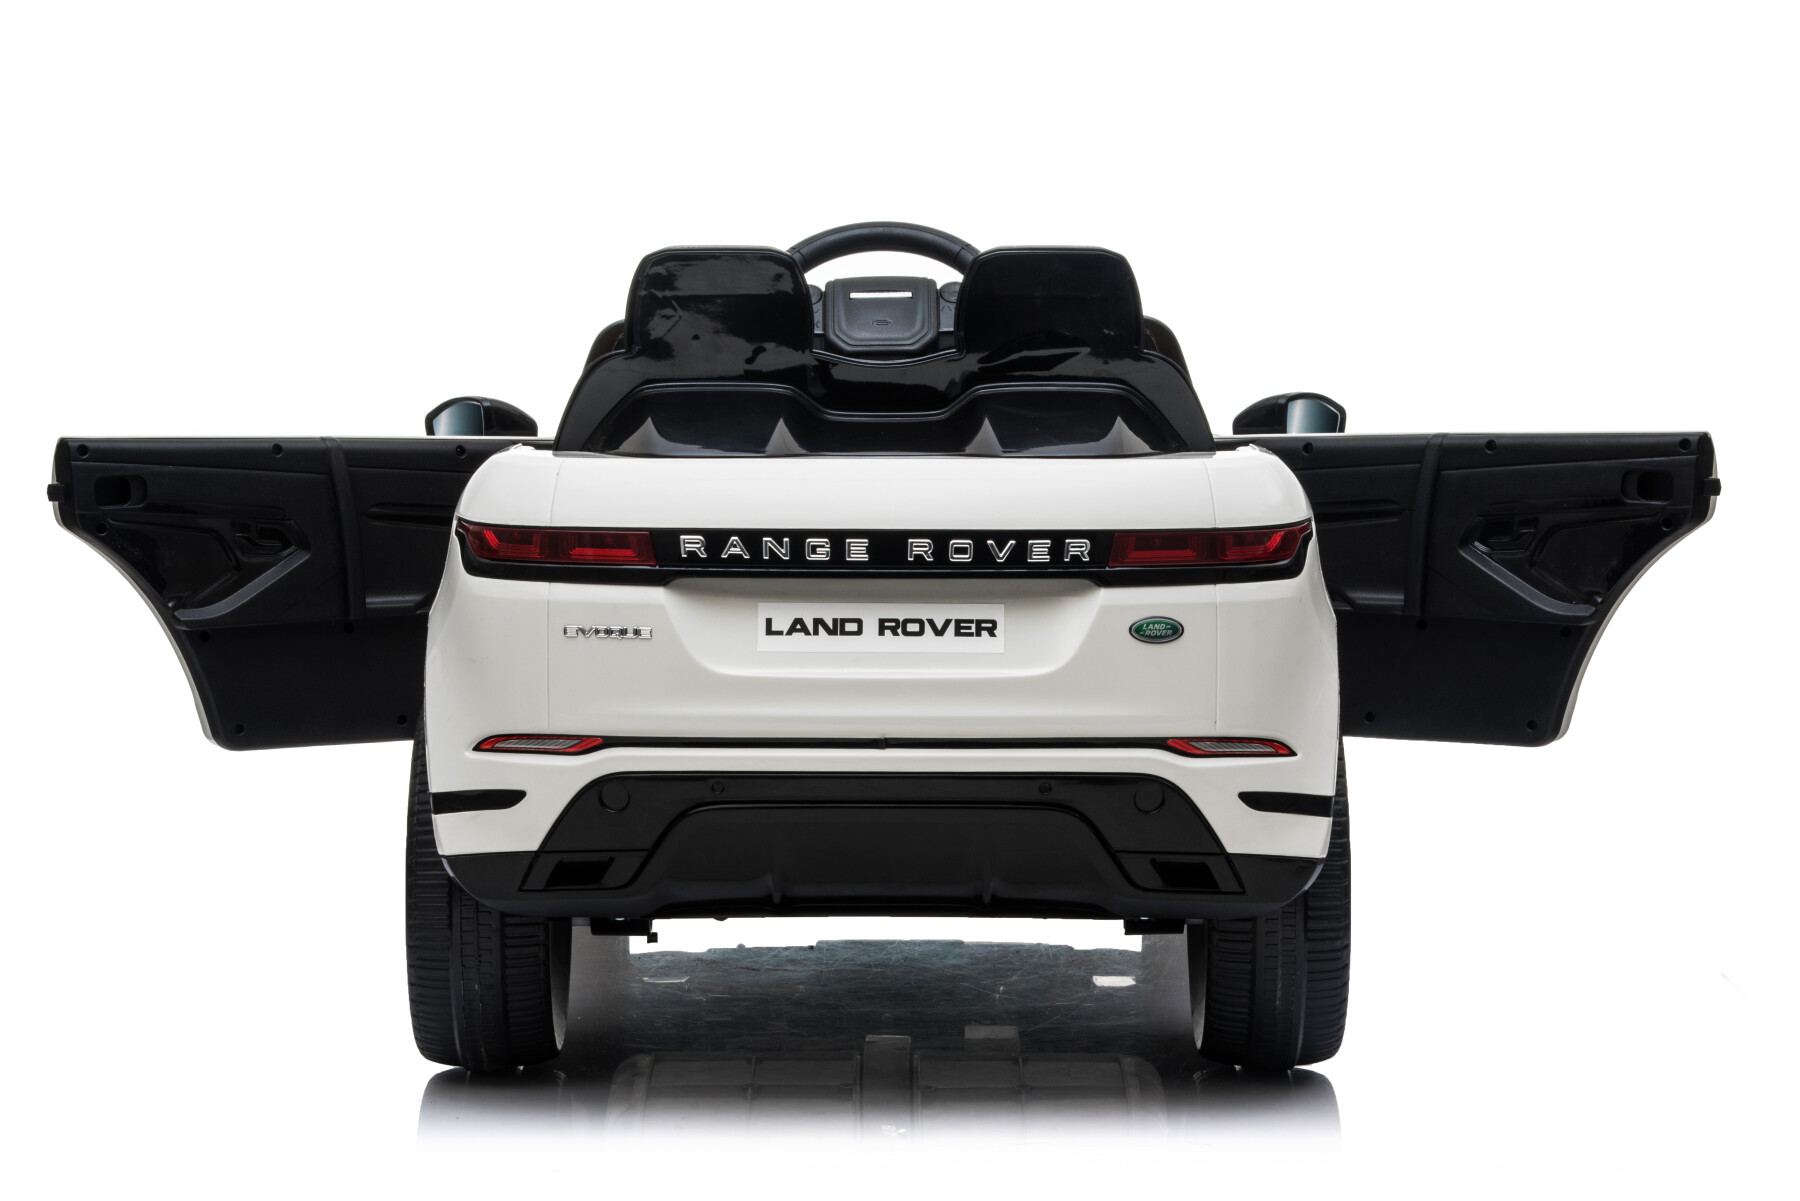 Land rover range rover evoque 12v bianca con radiocomando - 